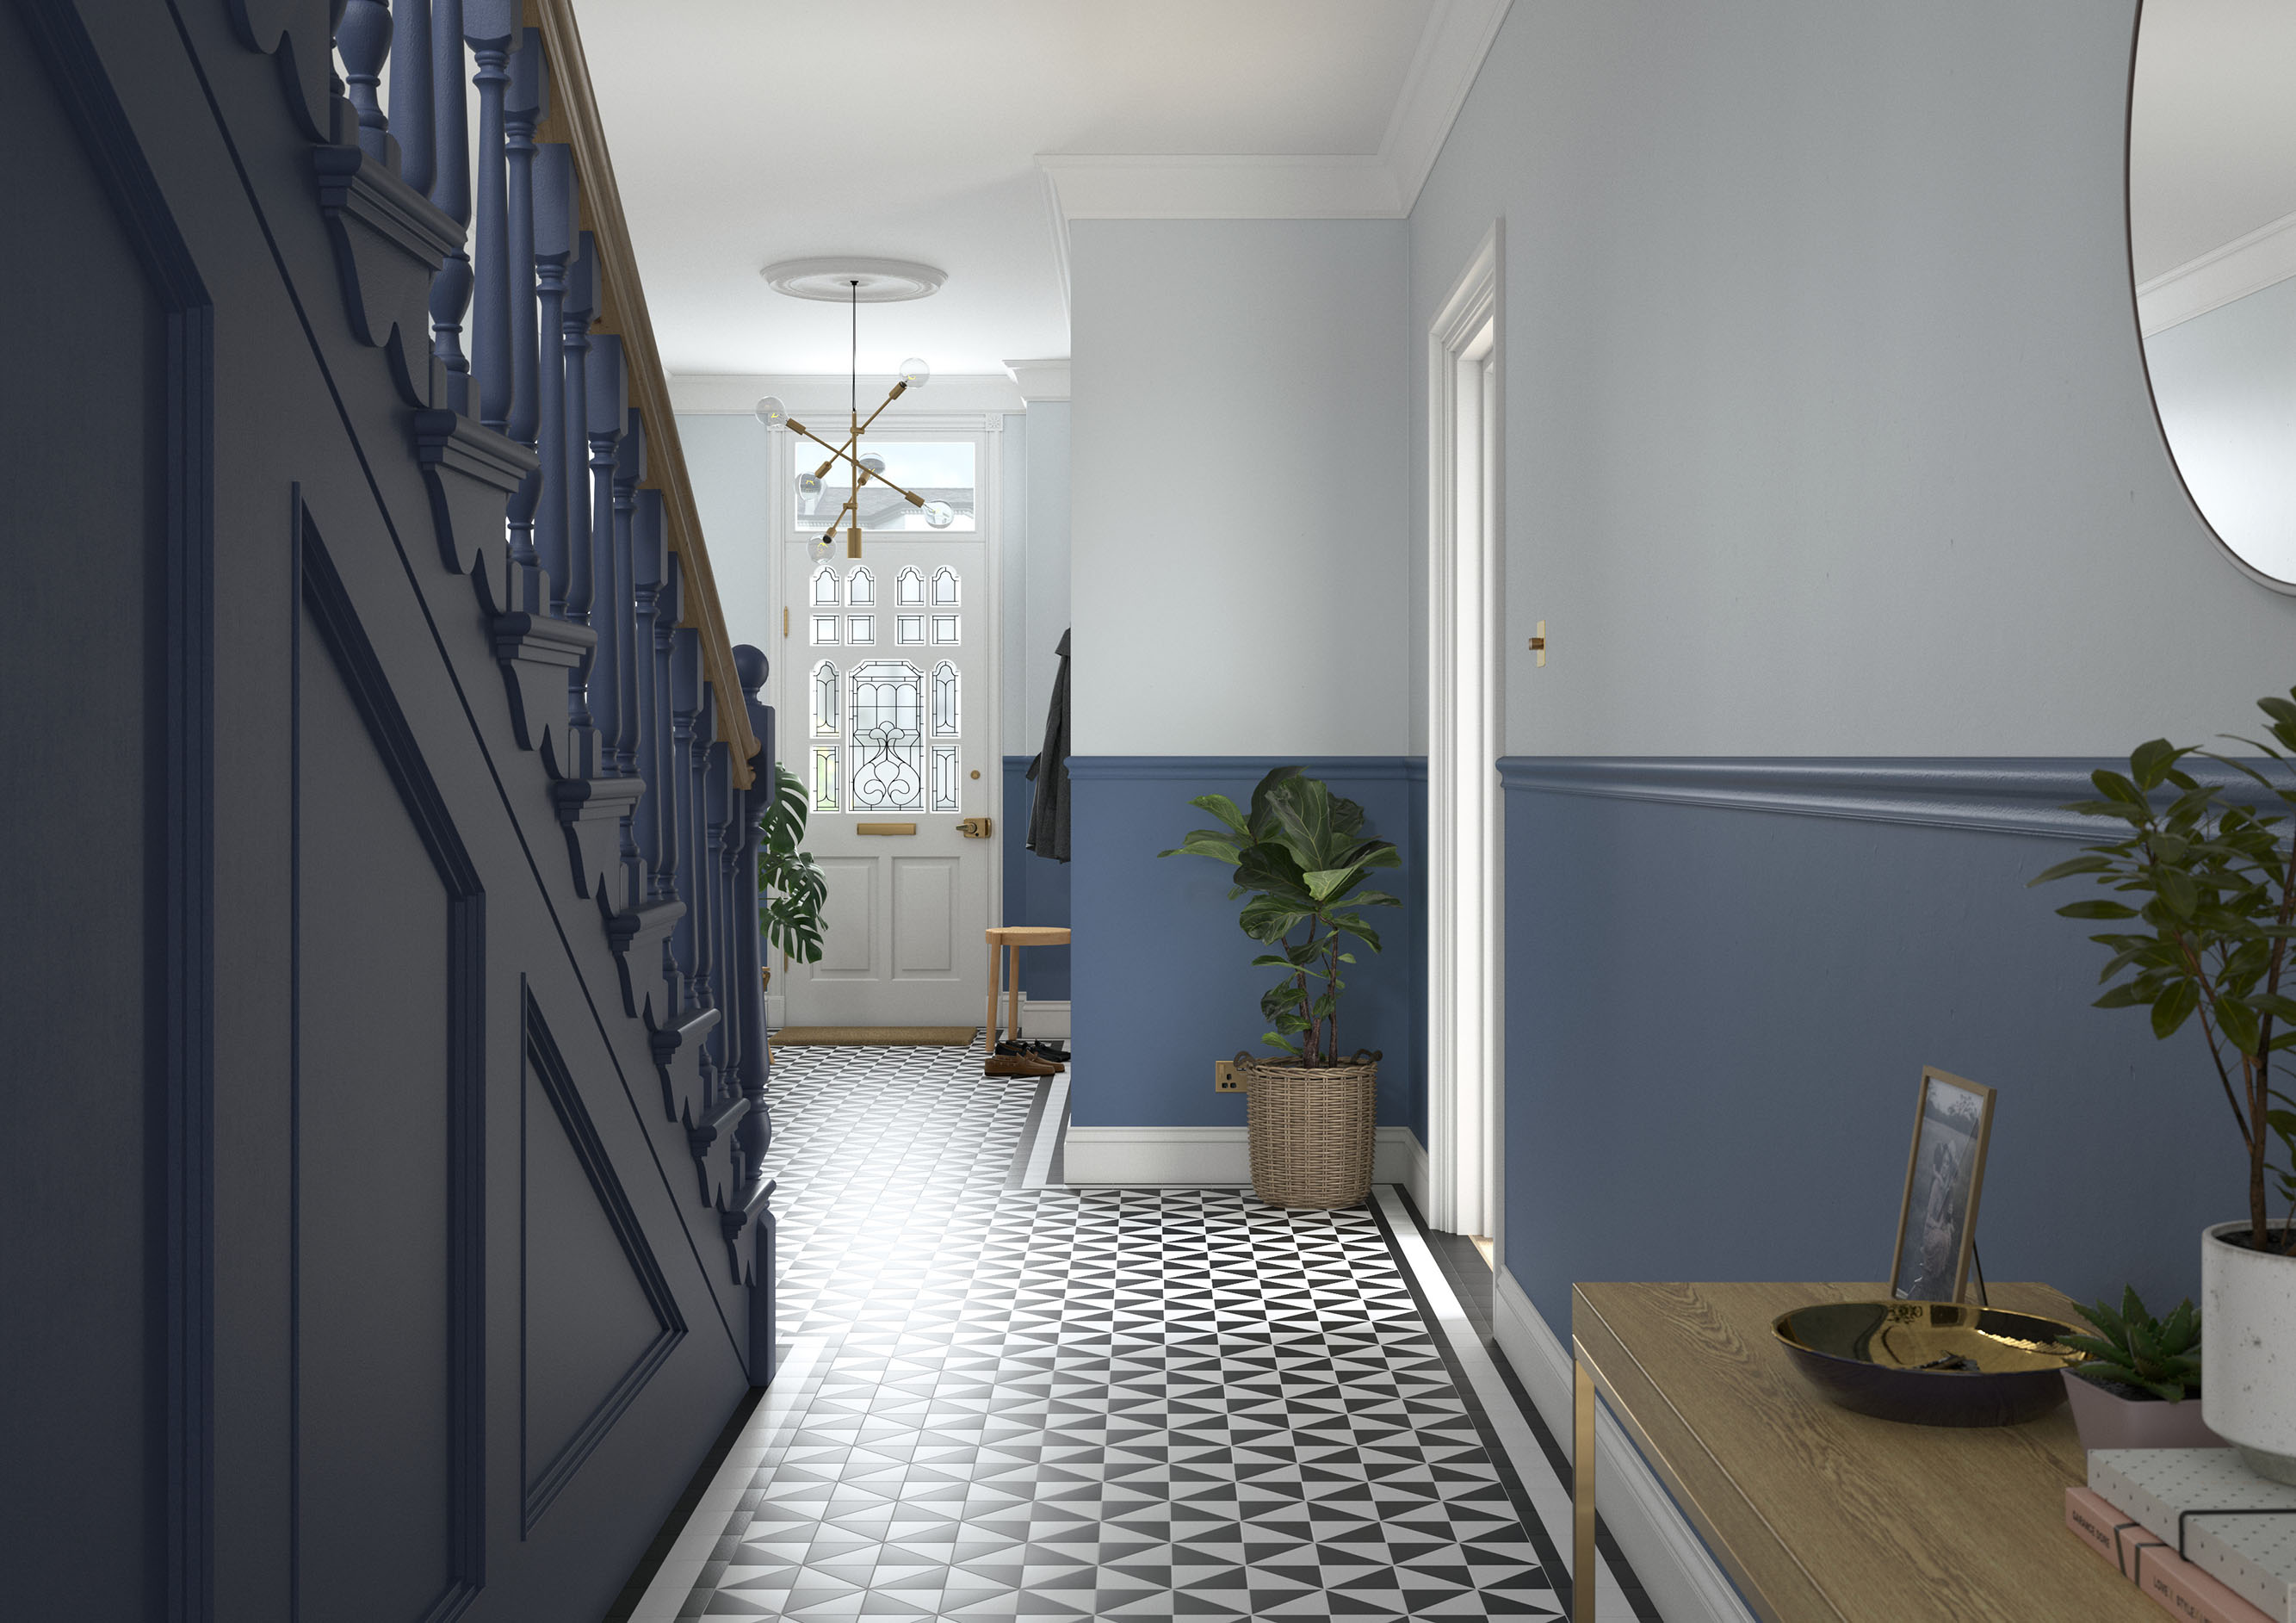 26792 Hallway   Lowerwall   Dh Indigo, Upperwall   Lead White, Stairs   Dh Oxford Blue (heritage)